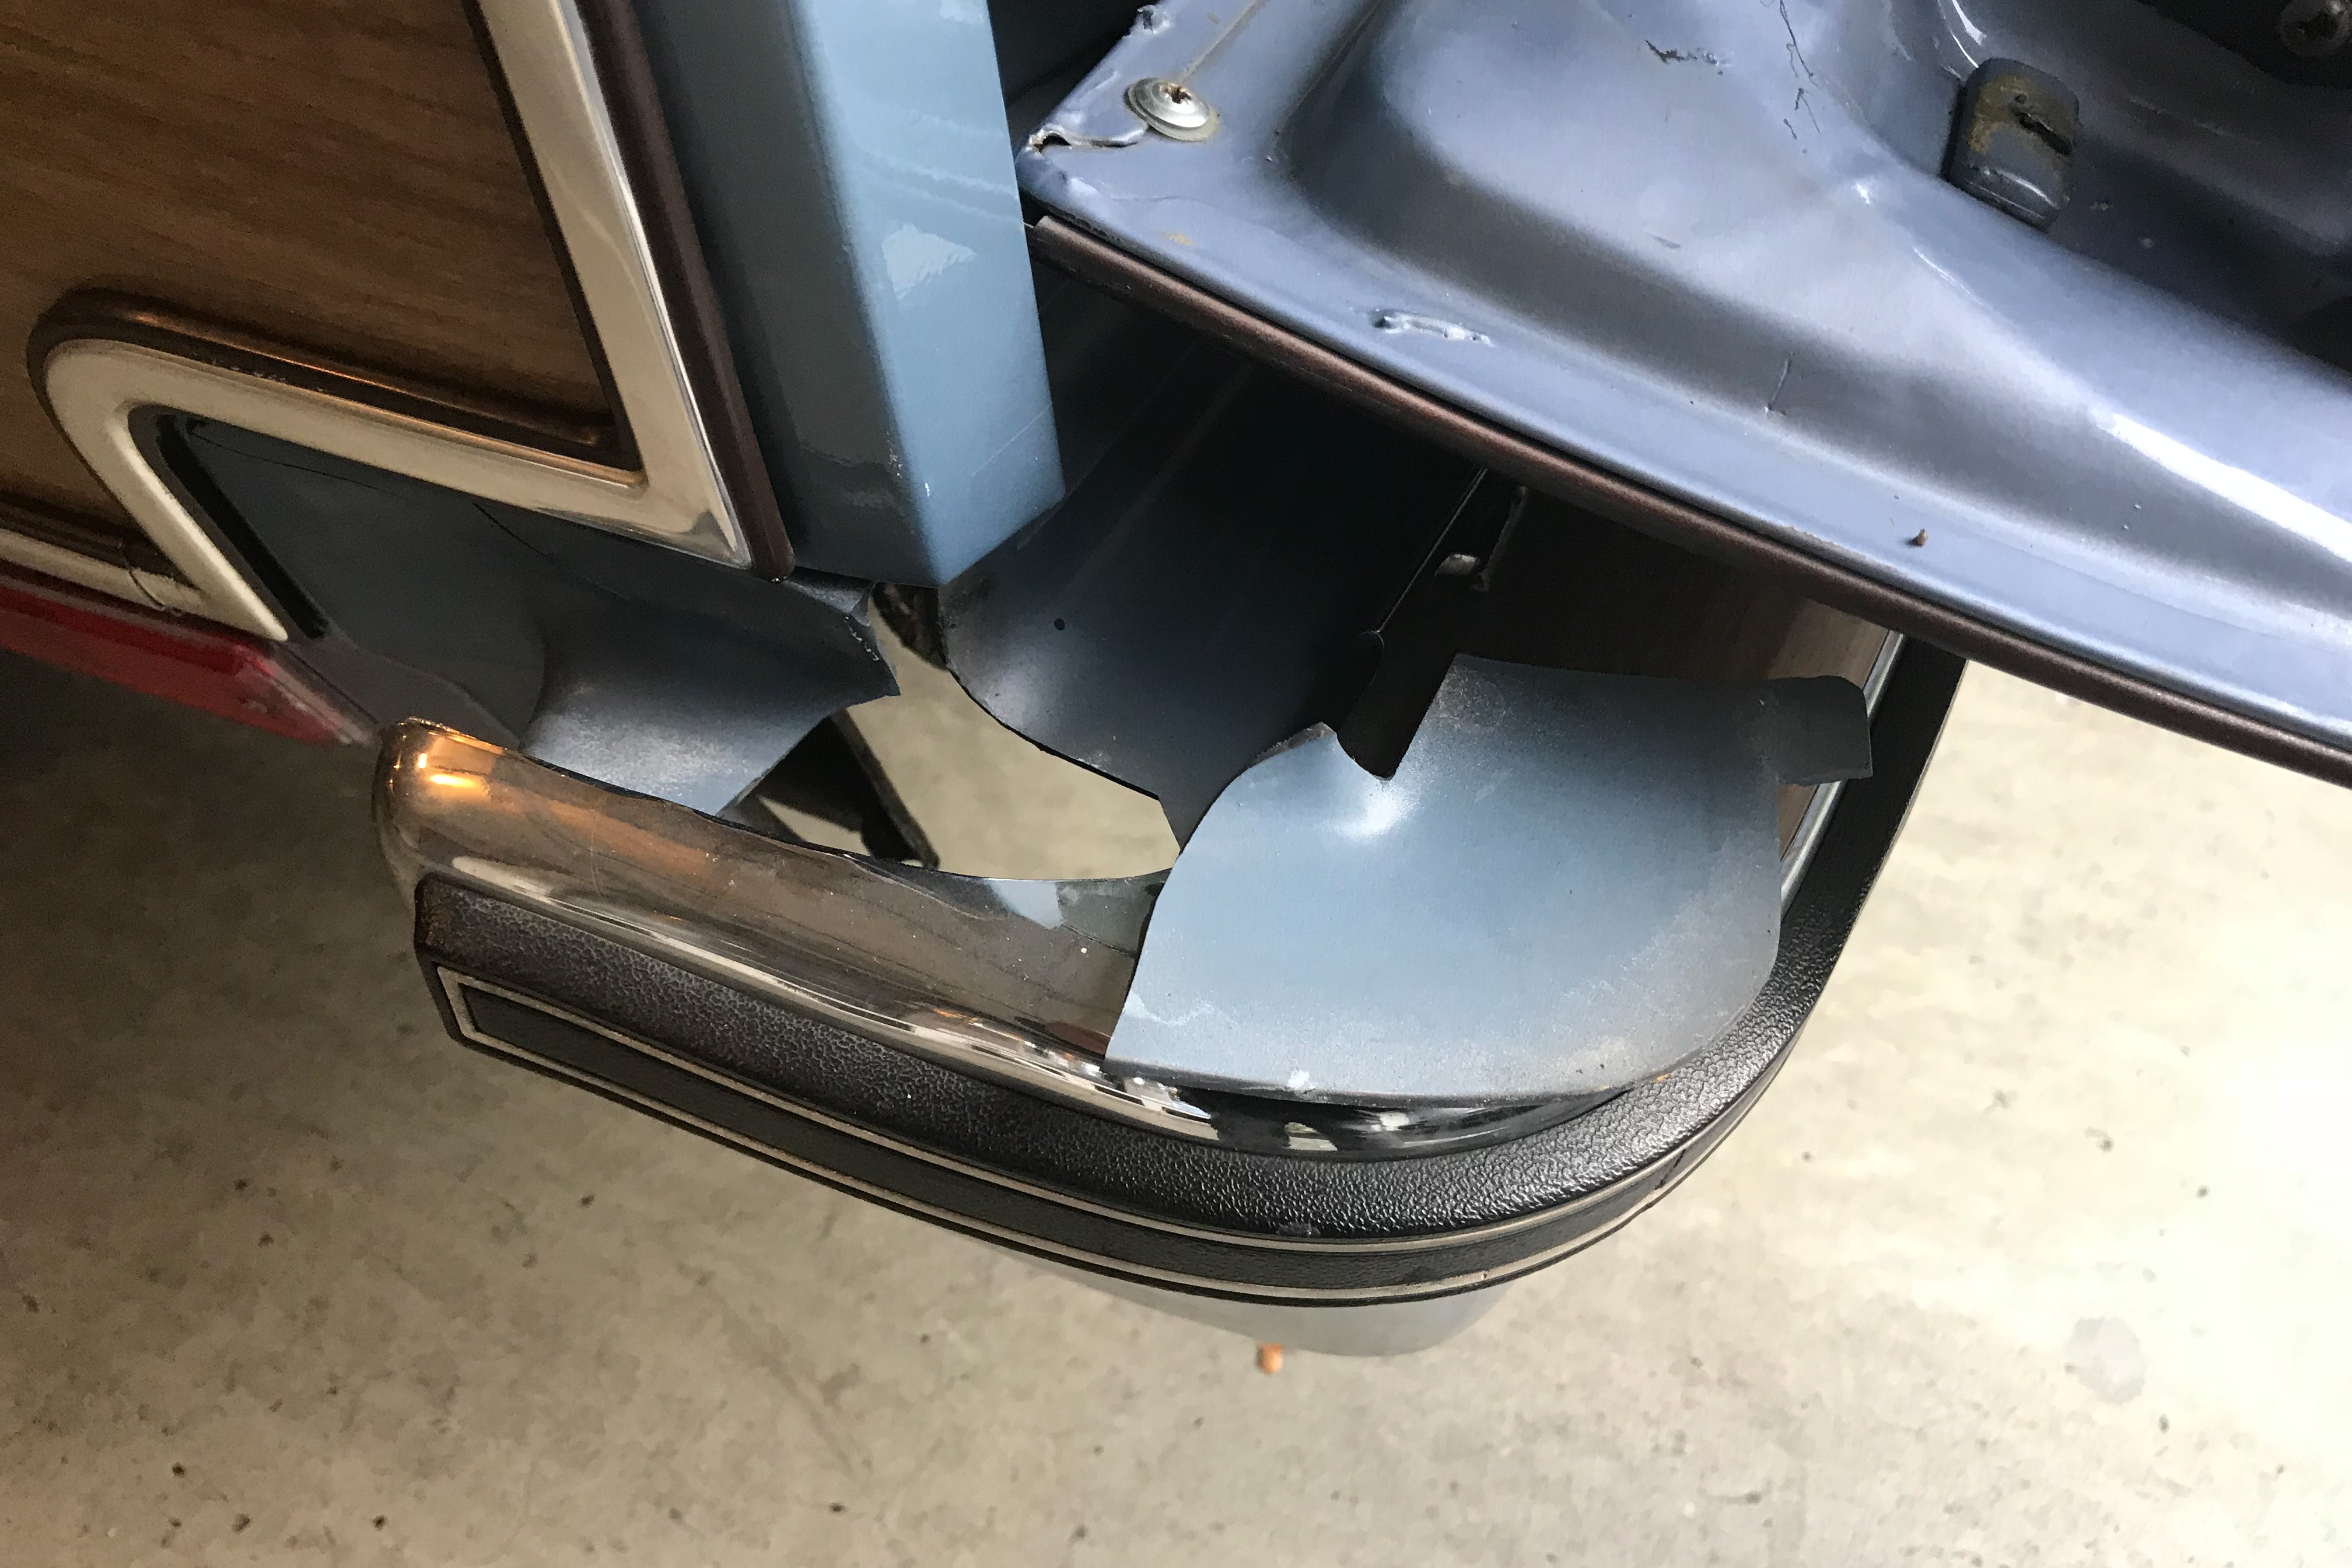 1983 Buick Regal Wagon rear bumper filler panel damage